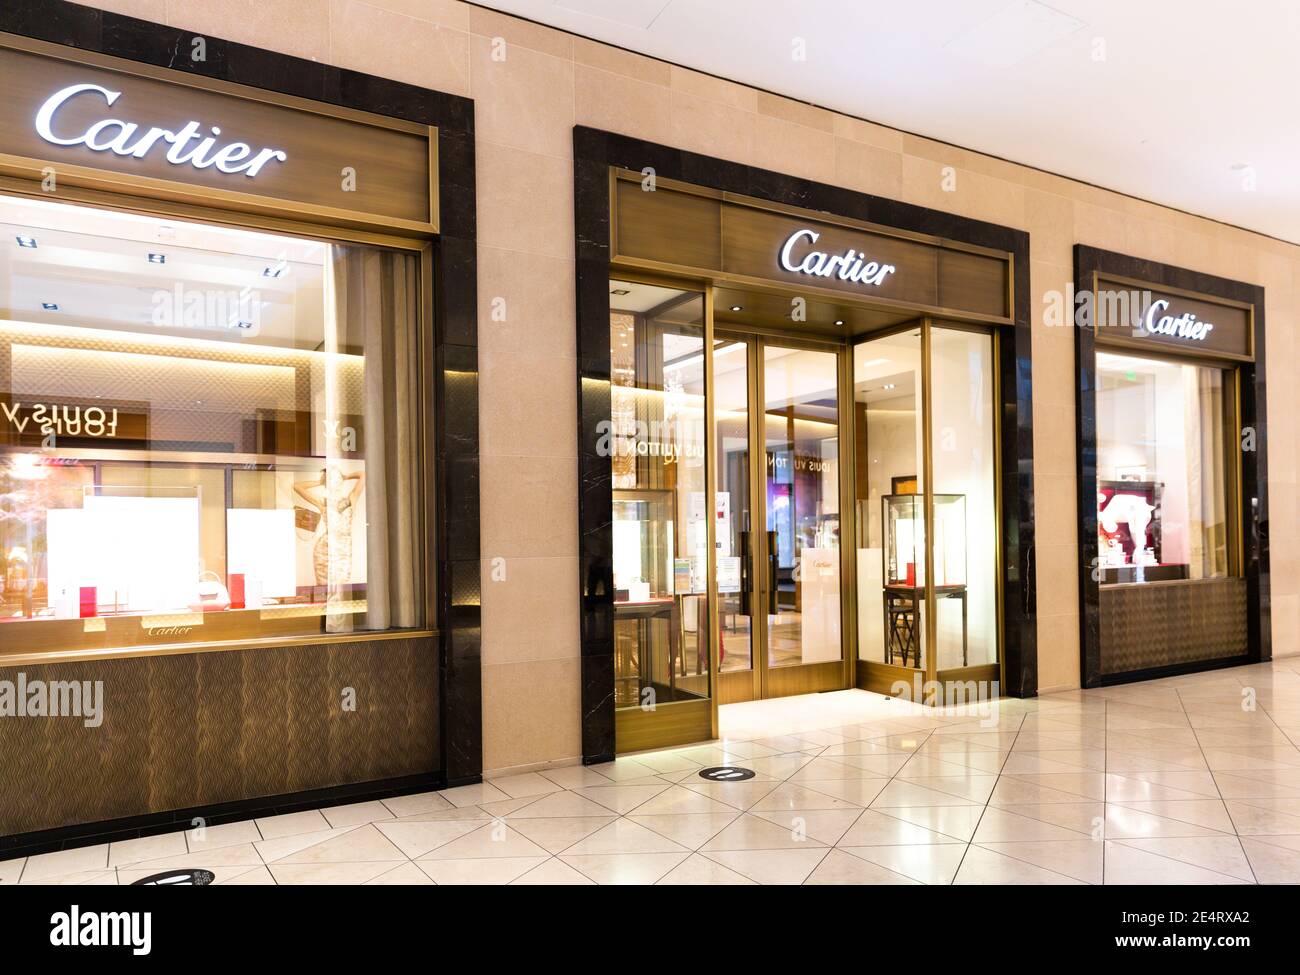 Cartier Watches High Resolution Stock 